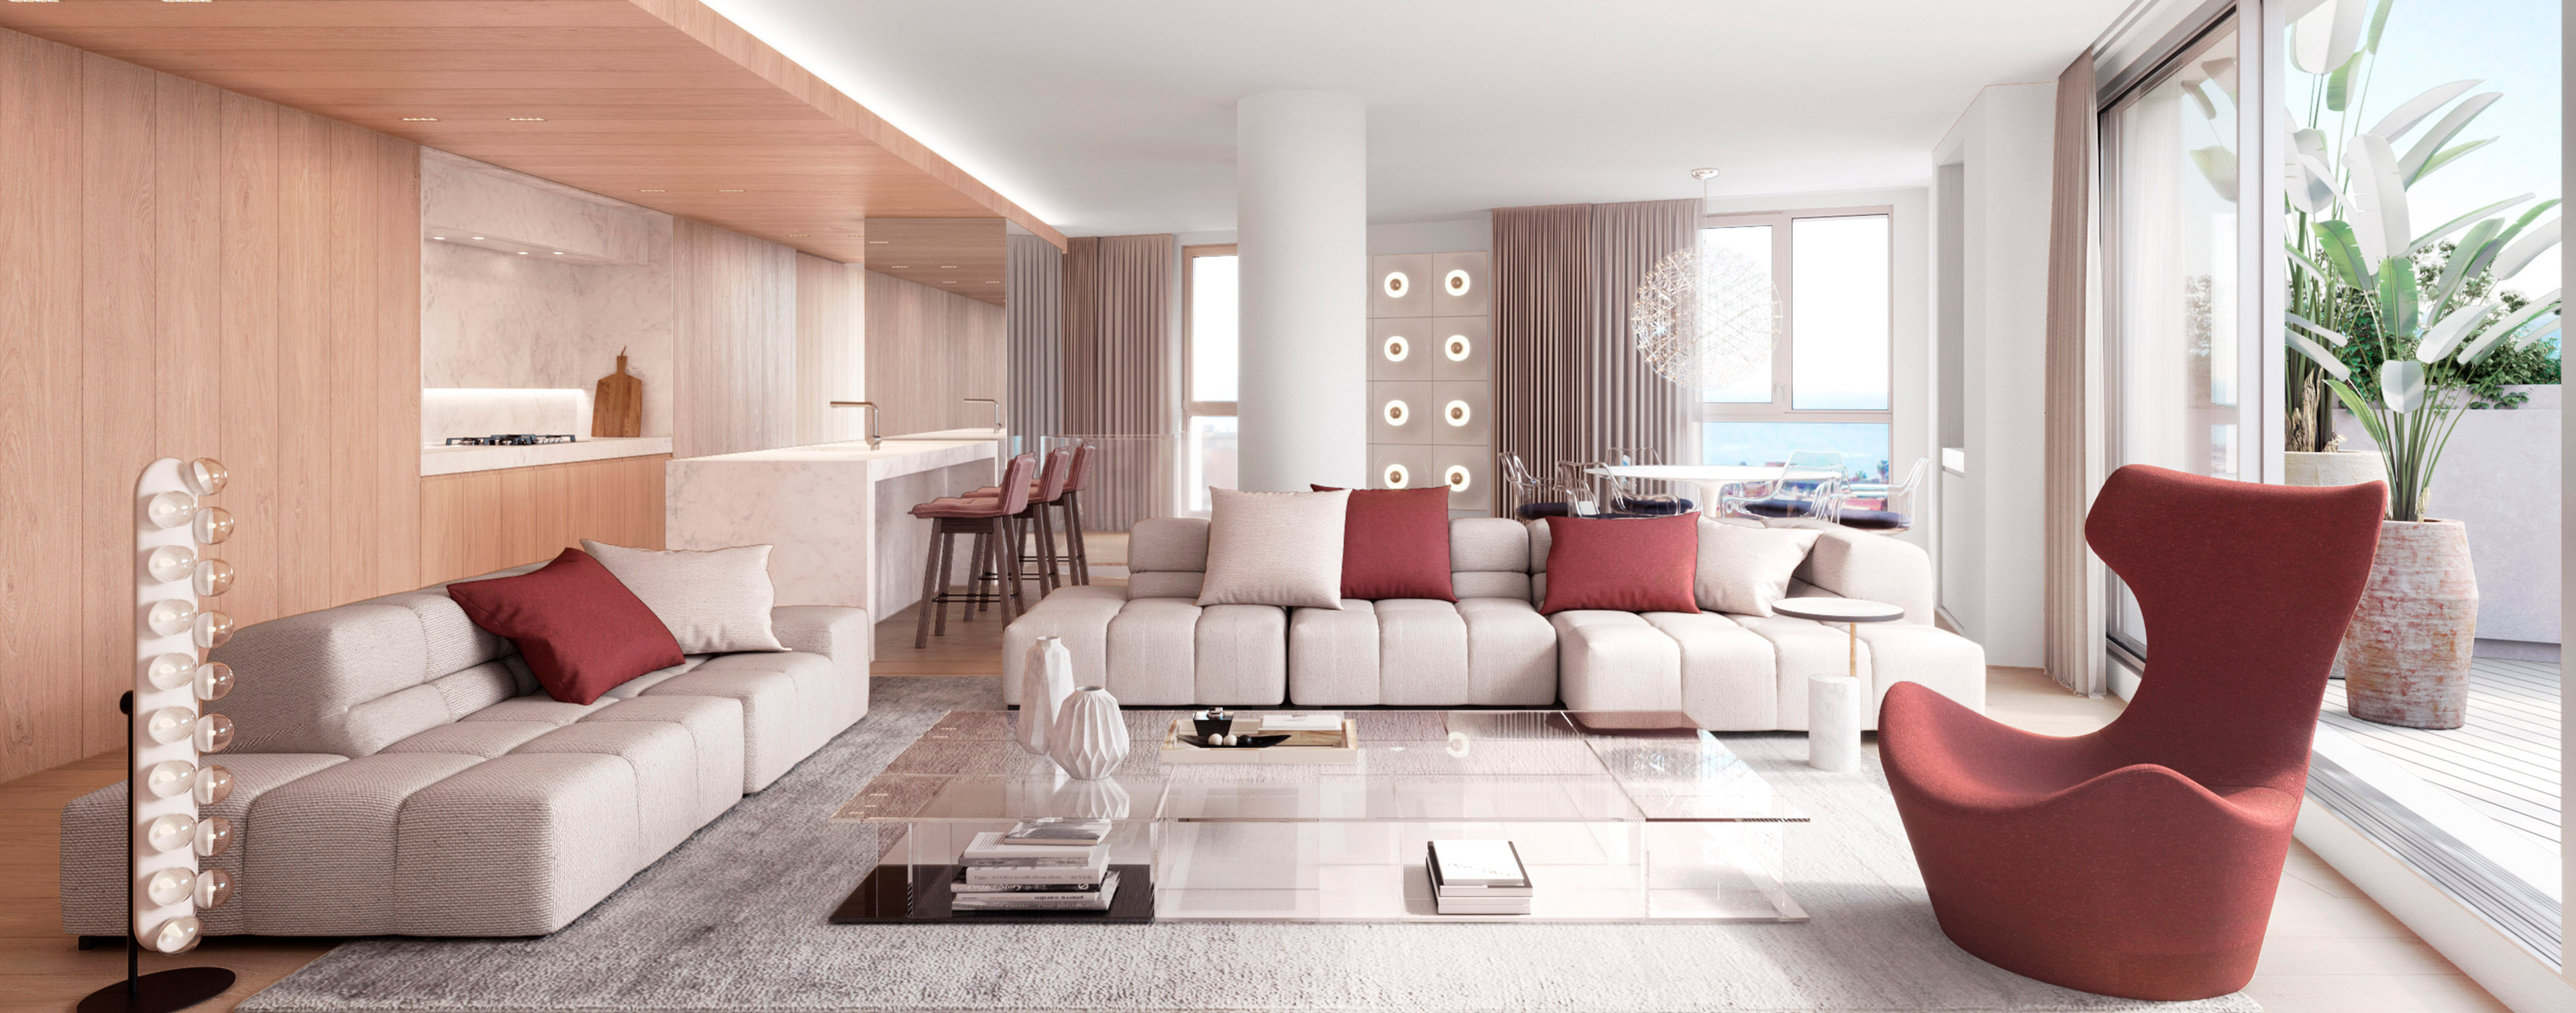 luv studio luxury architects barcelona dr aiguader penthouse IMG 01 - Dr Aiguader Penthouse